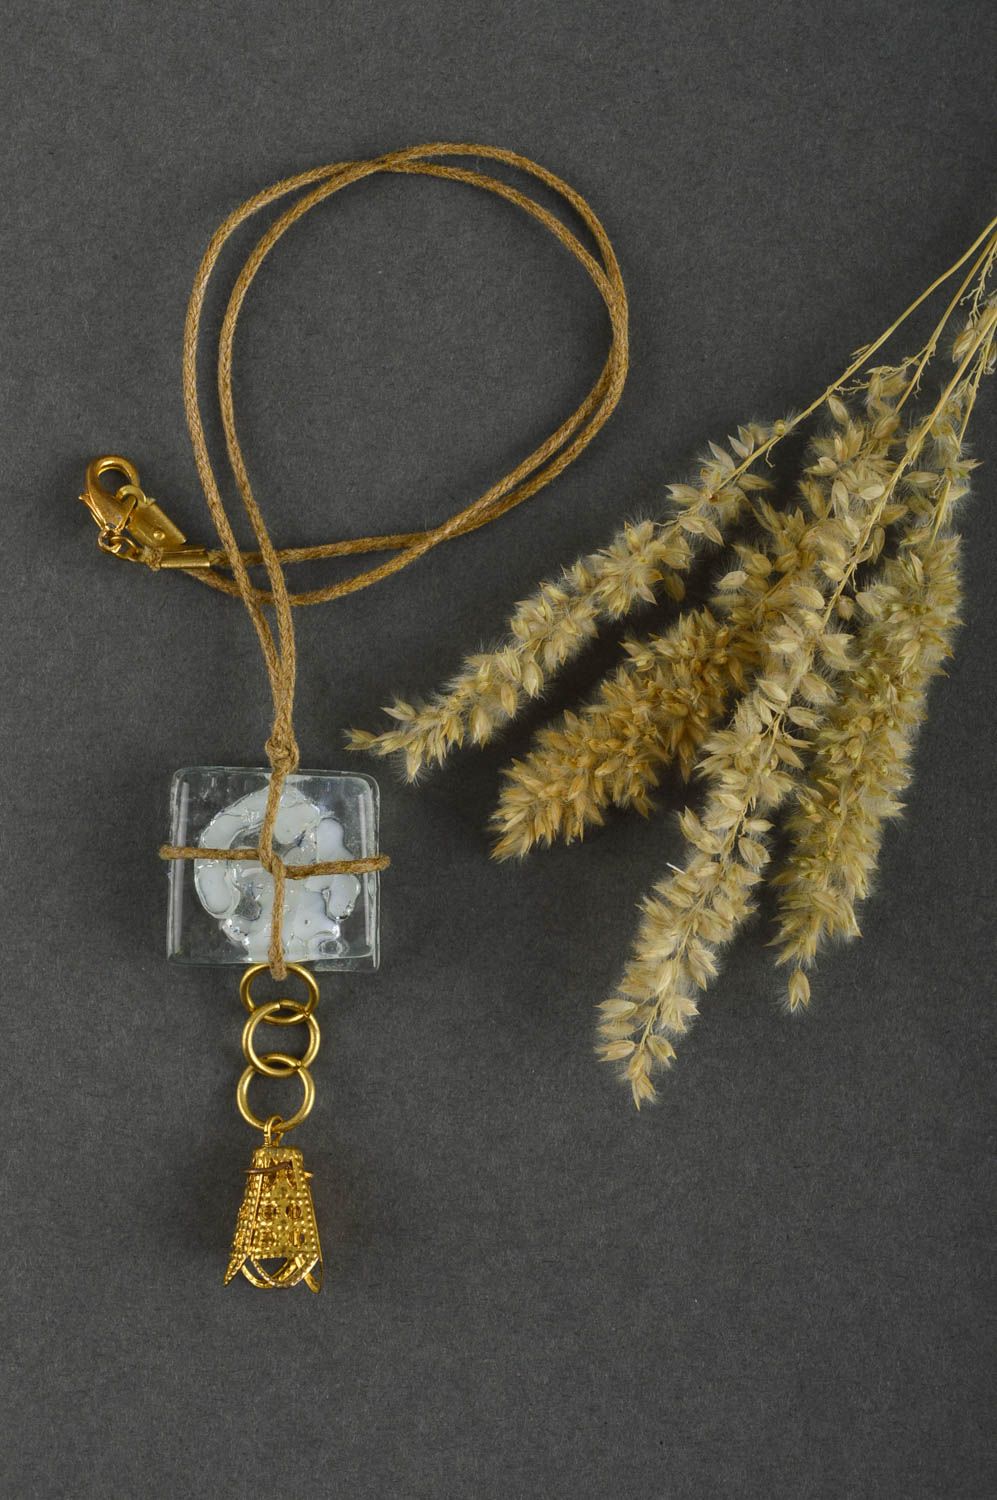 Handmade designer glass pendant unusual stylish pendant neck jewelry gift photo 1